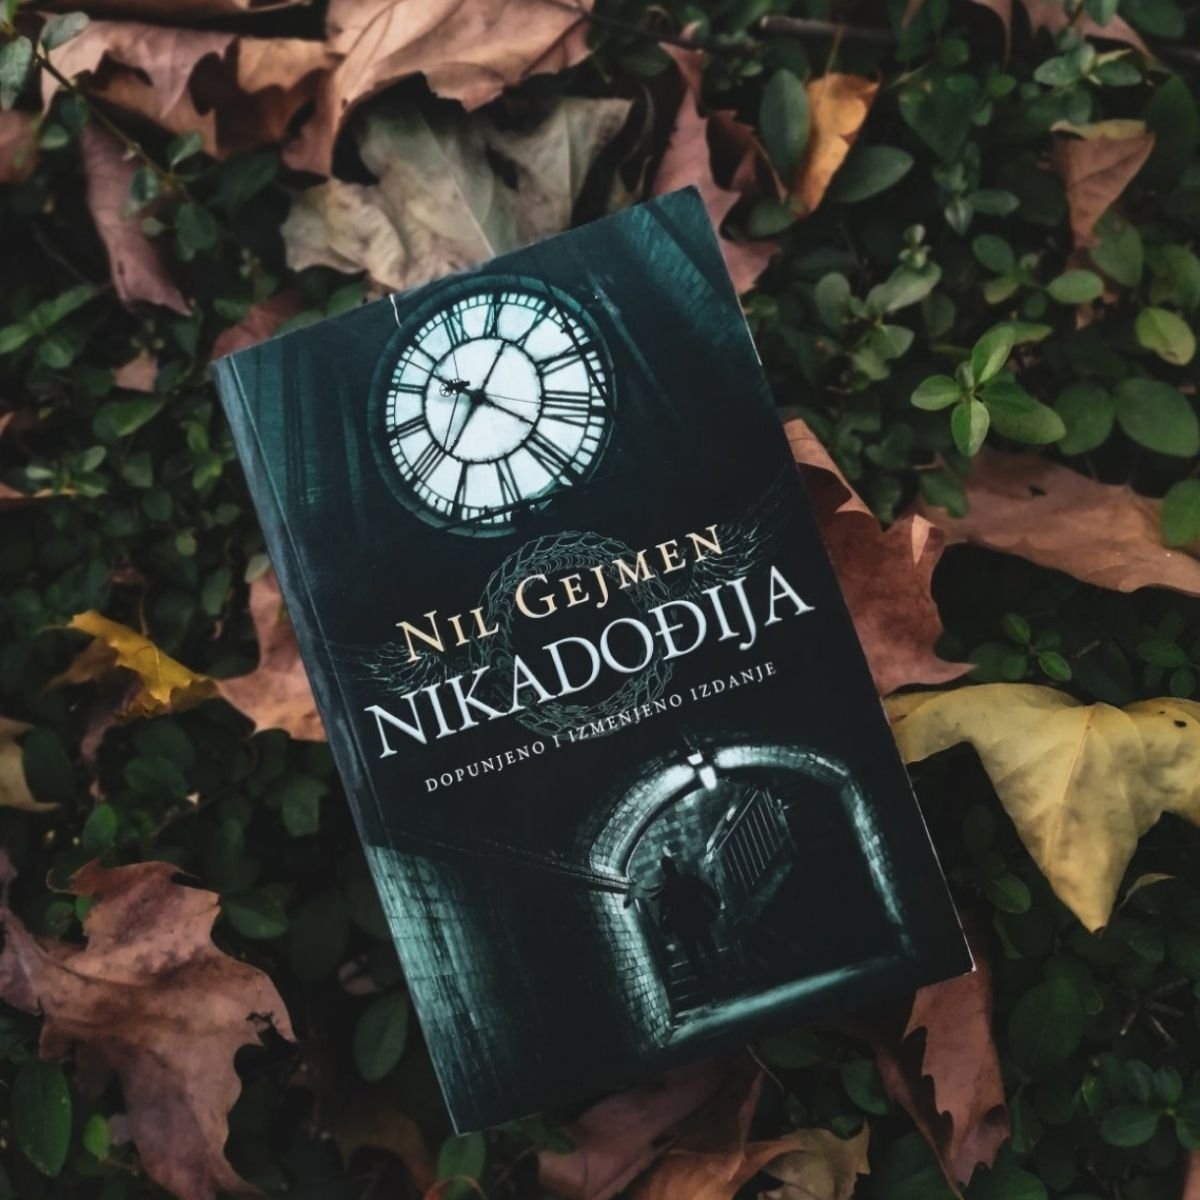 Naslovna strana romana Nikadođija, autor Nil Gejmen / foto: Deana Malek